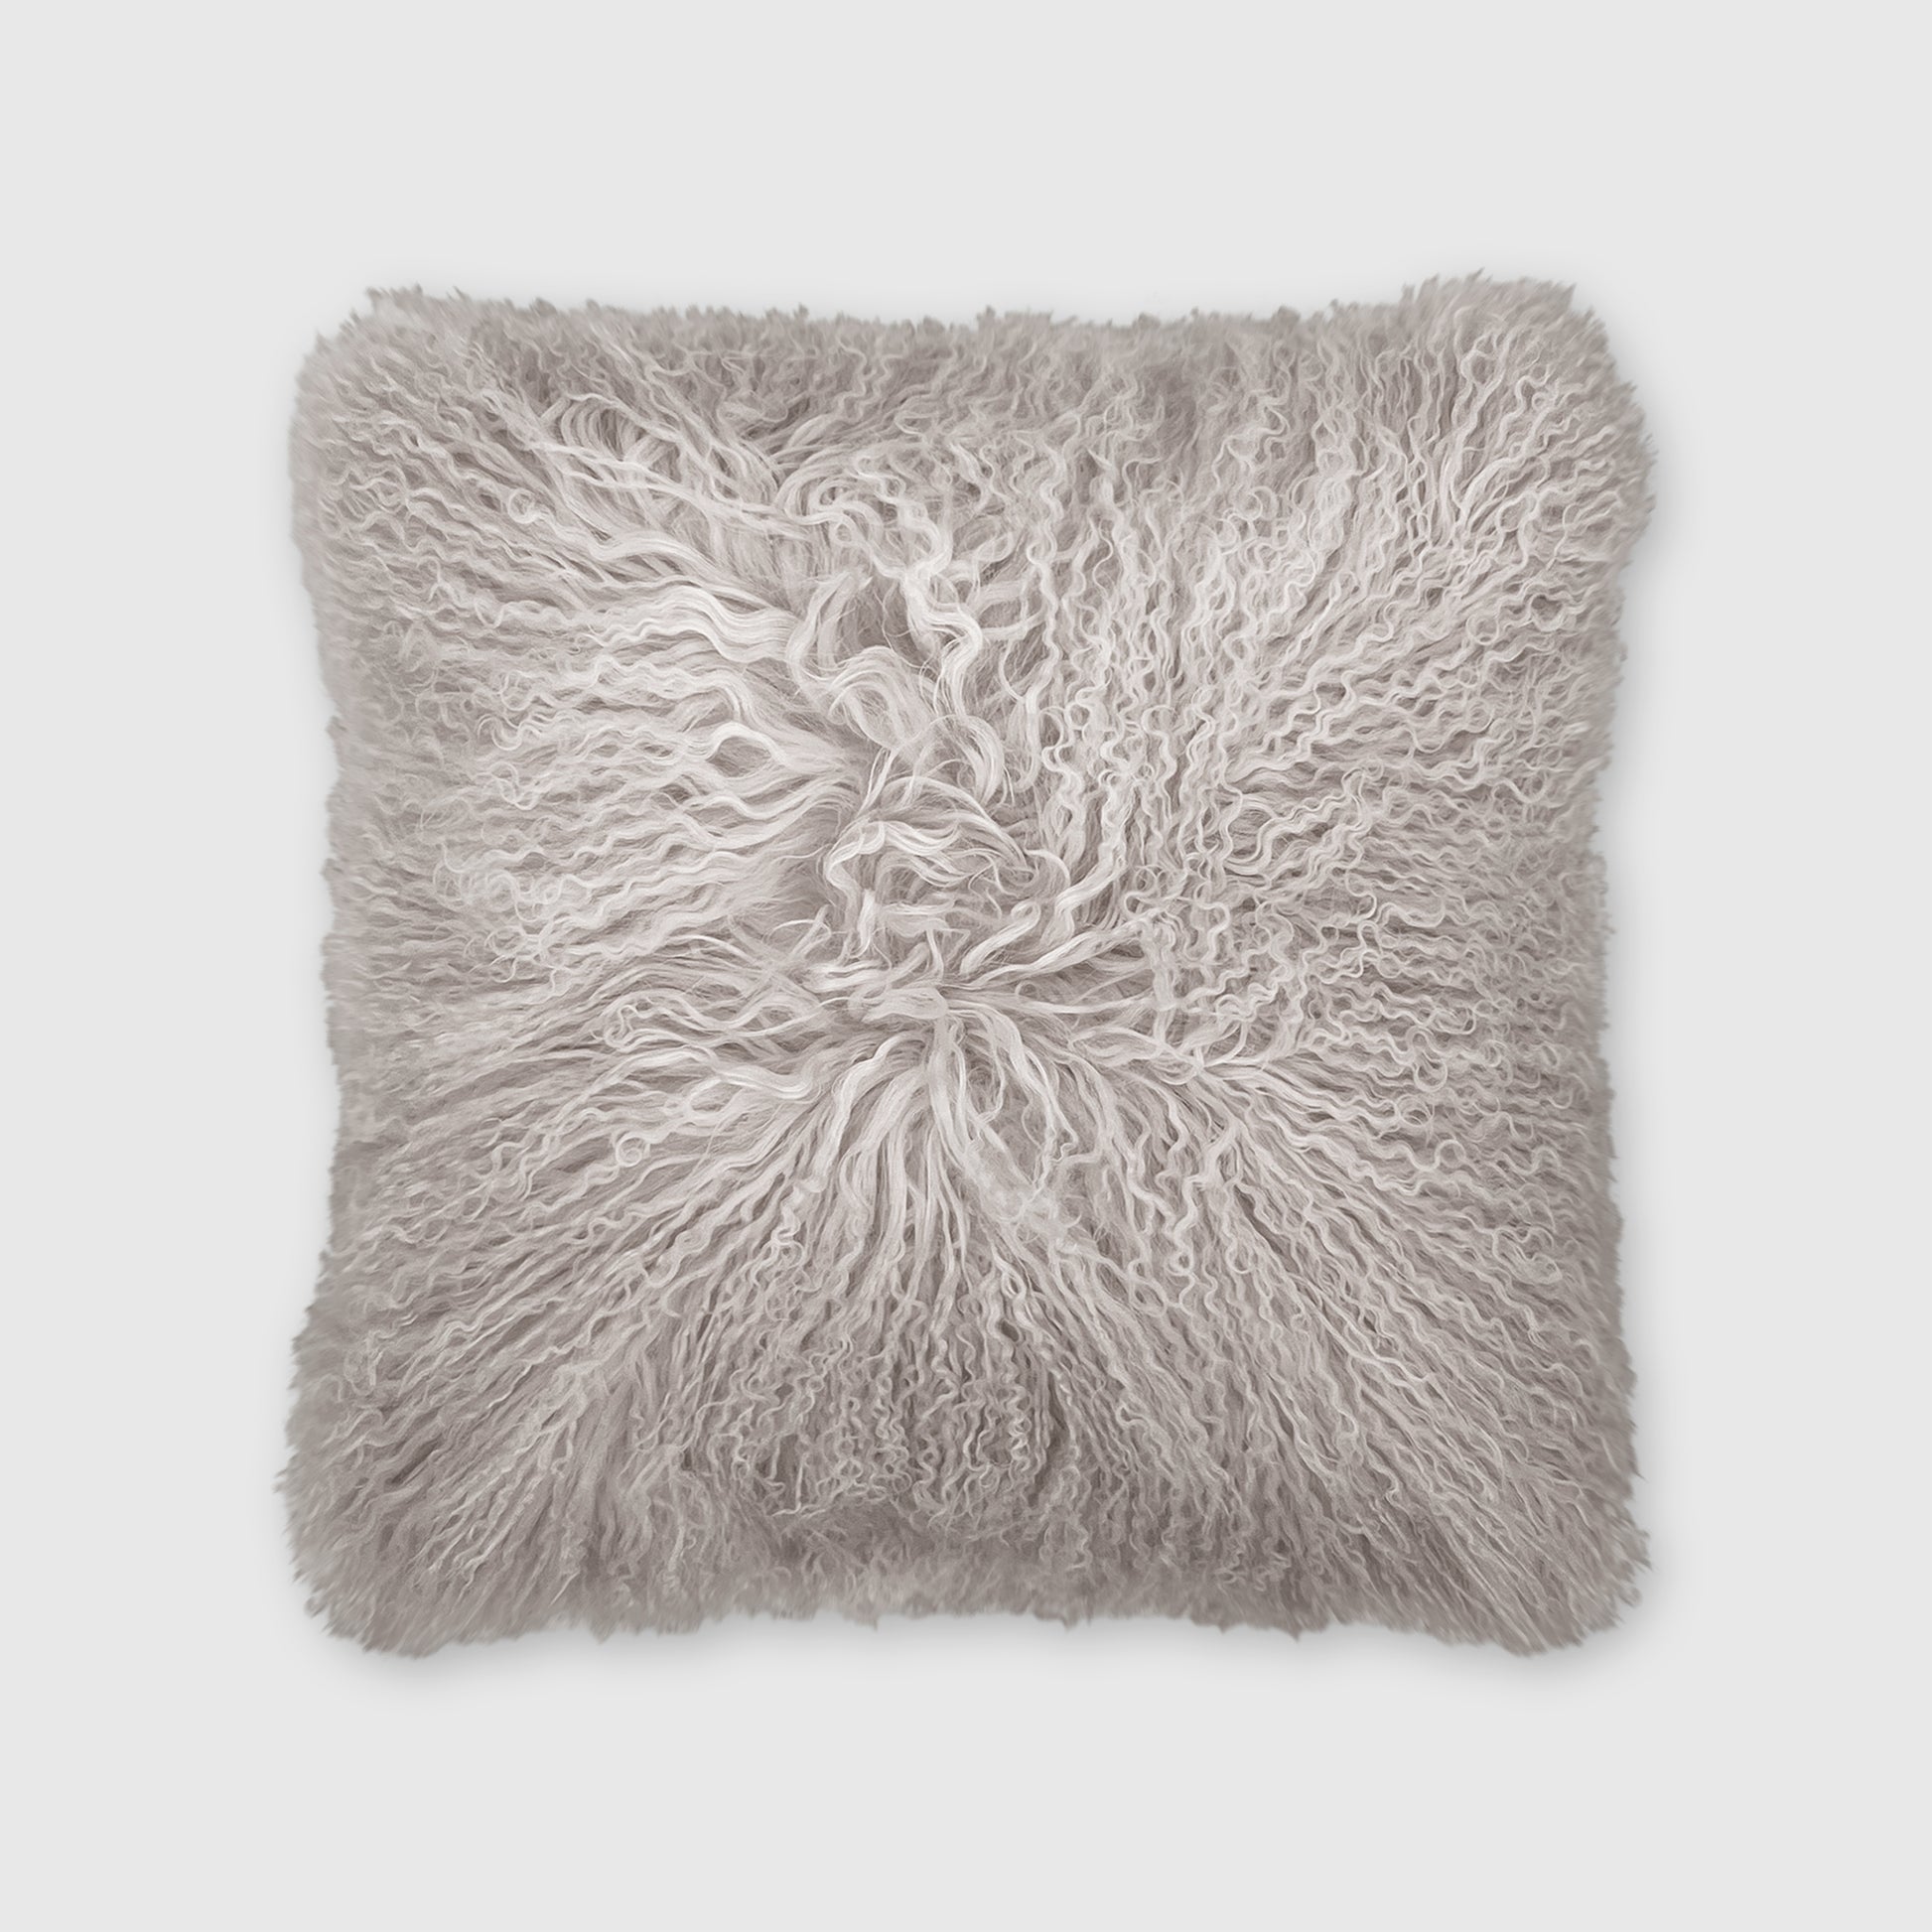 The Mood | Gobi Mongolian Lambskin 20”x20” Pillow, Chateau Gray